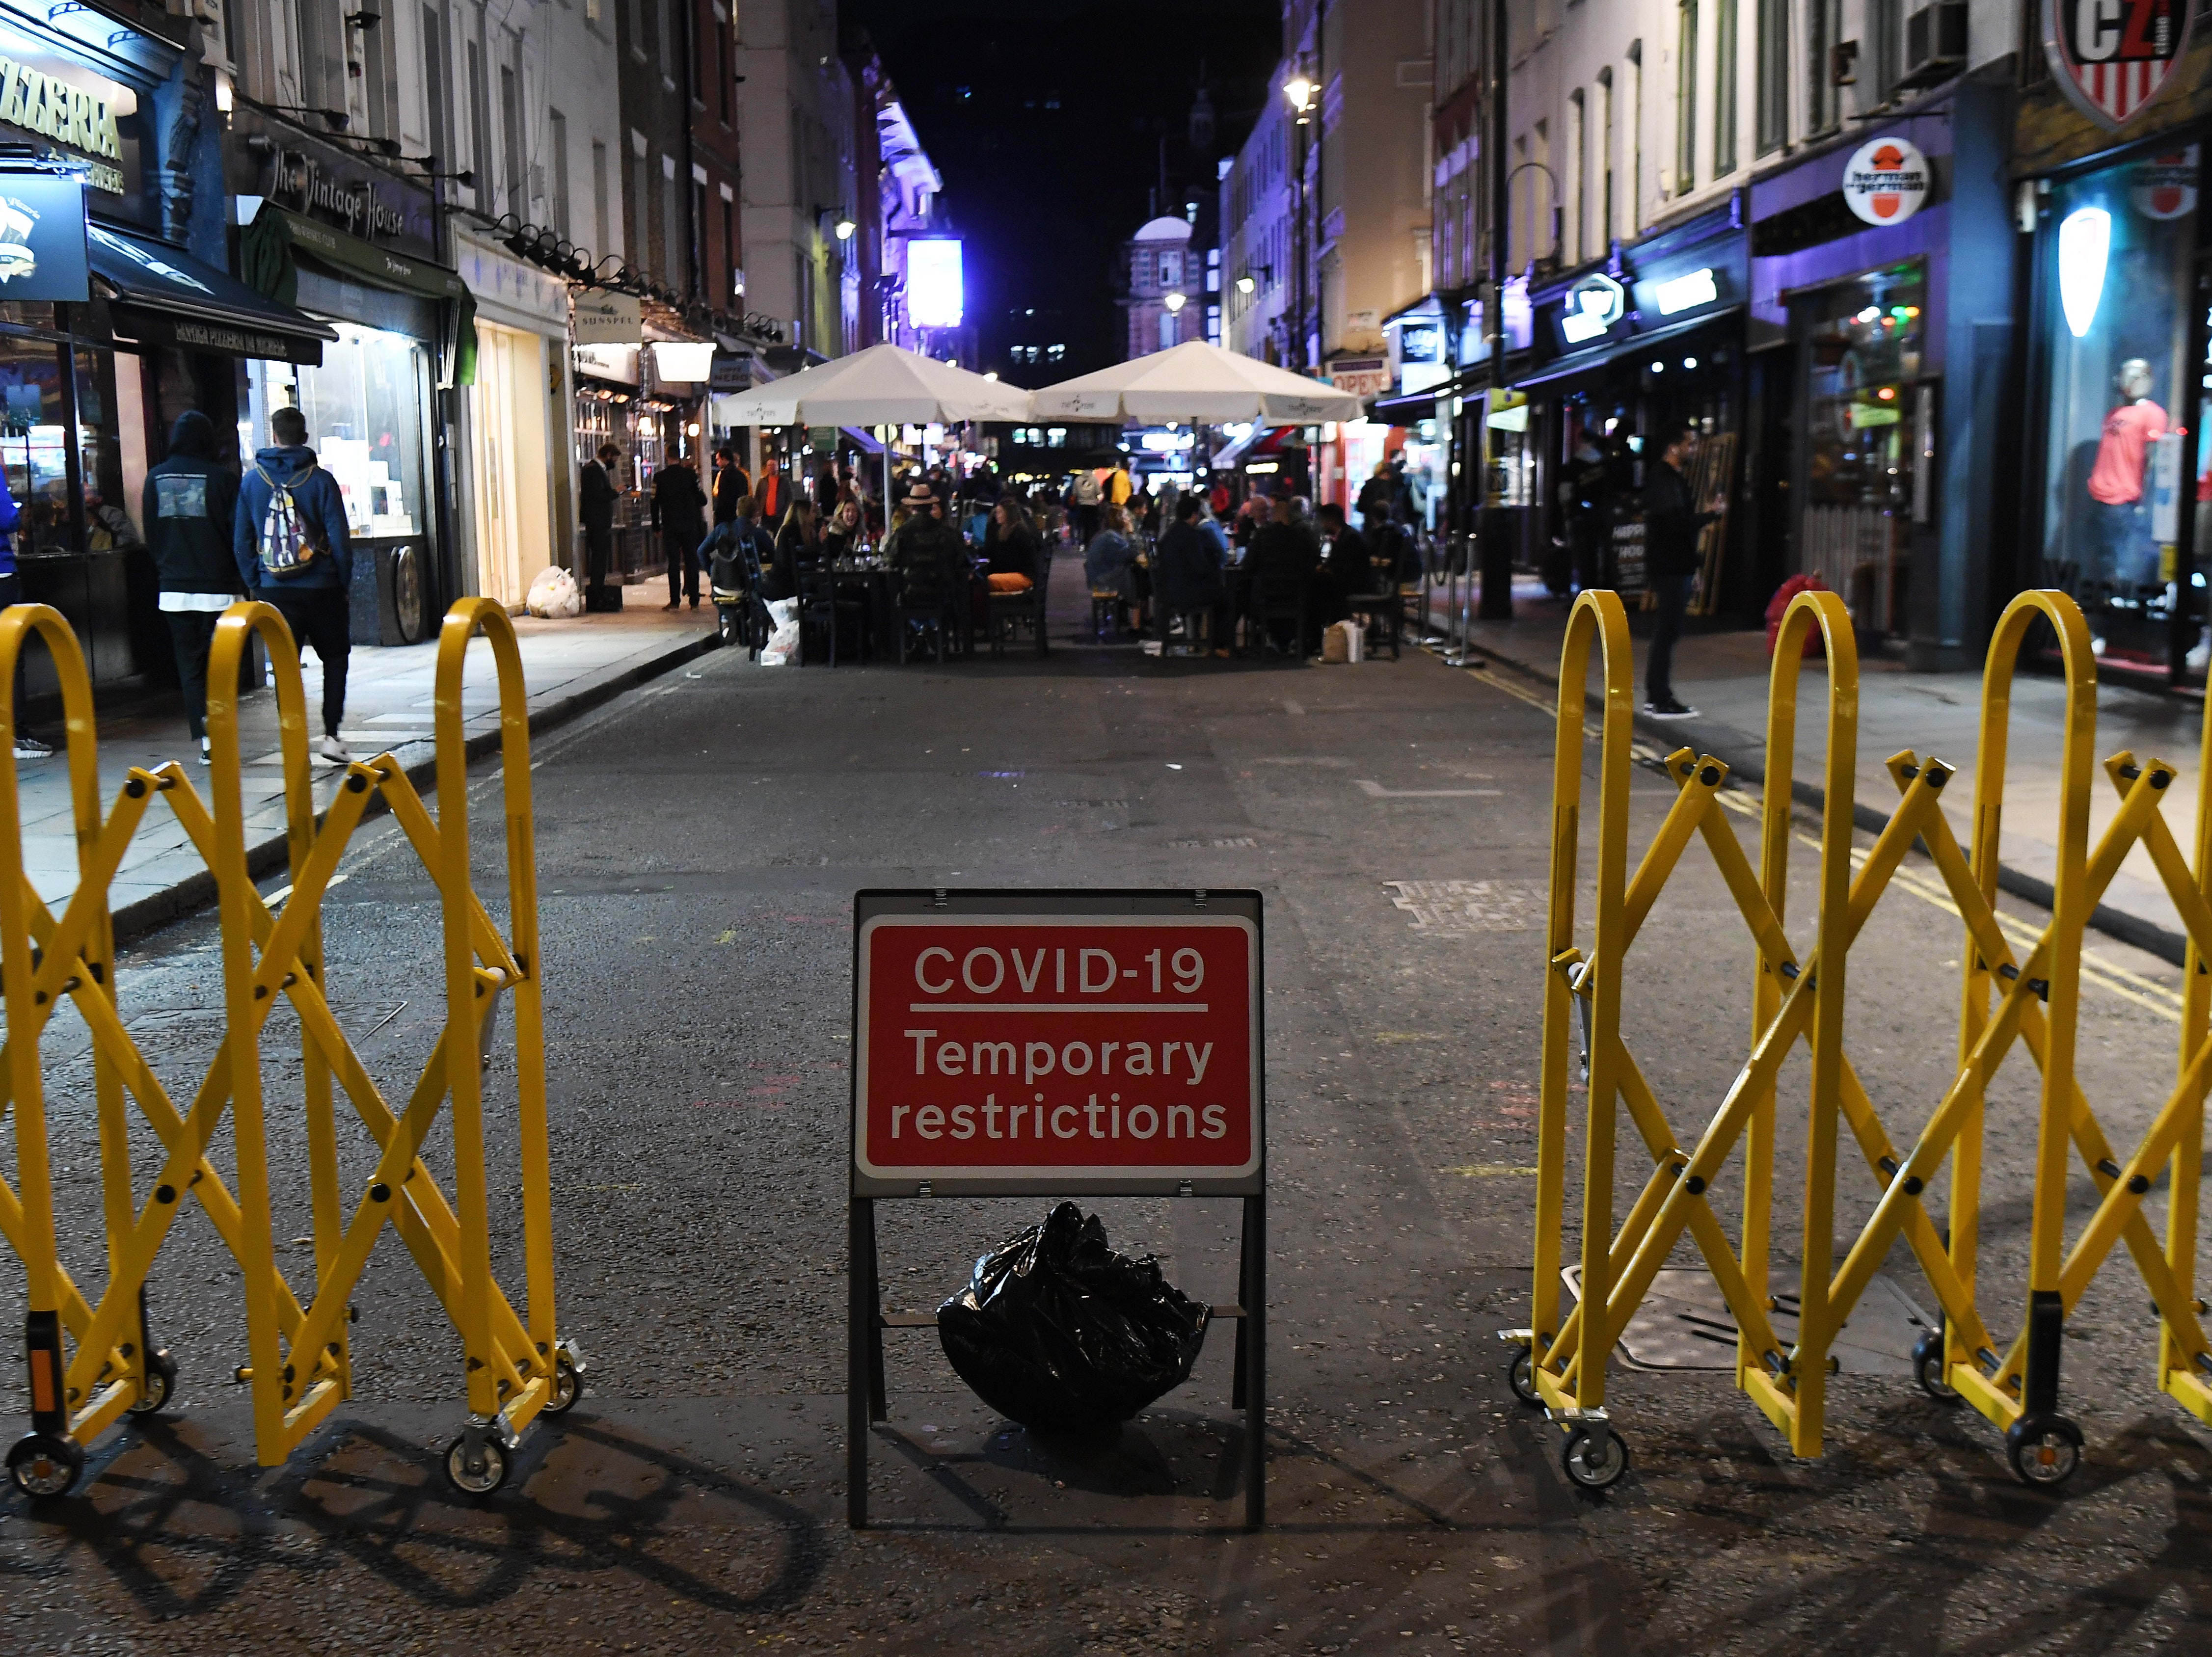 Nightclubs are shut and bars must follow 10pm curfew due to coronavirus